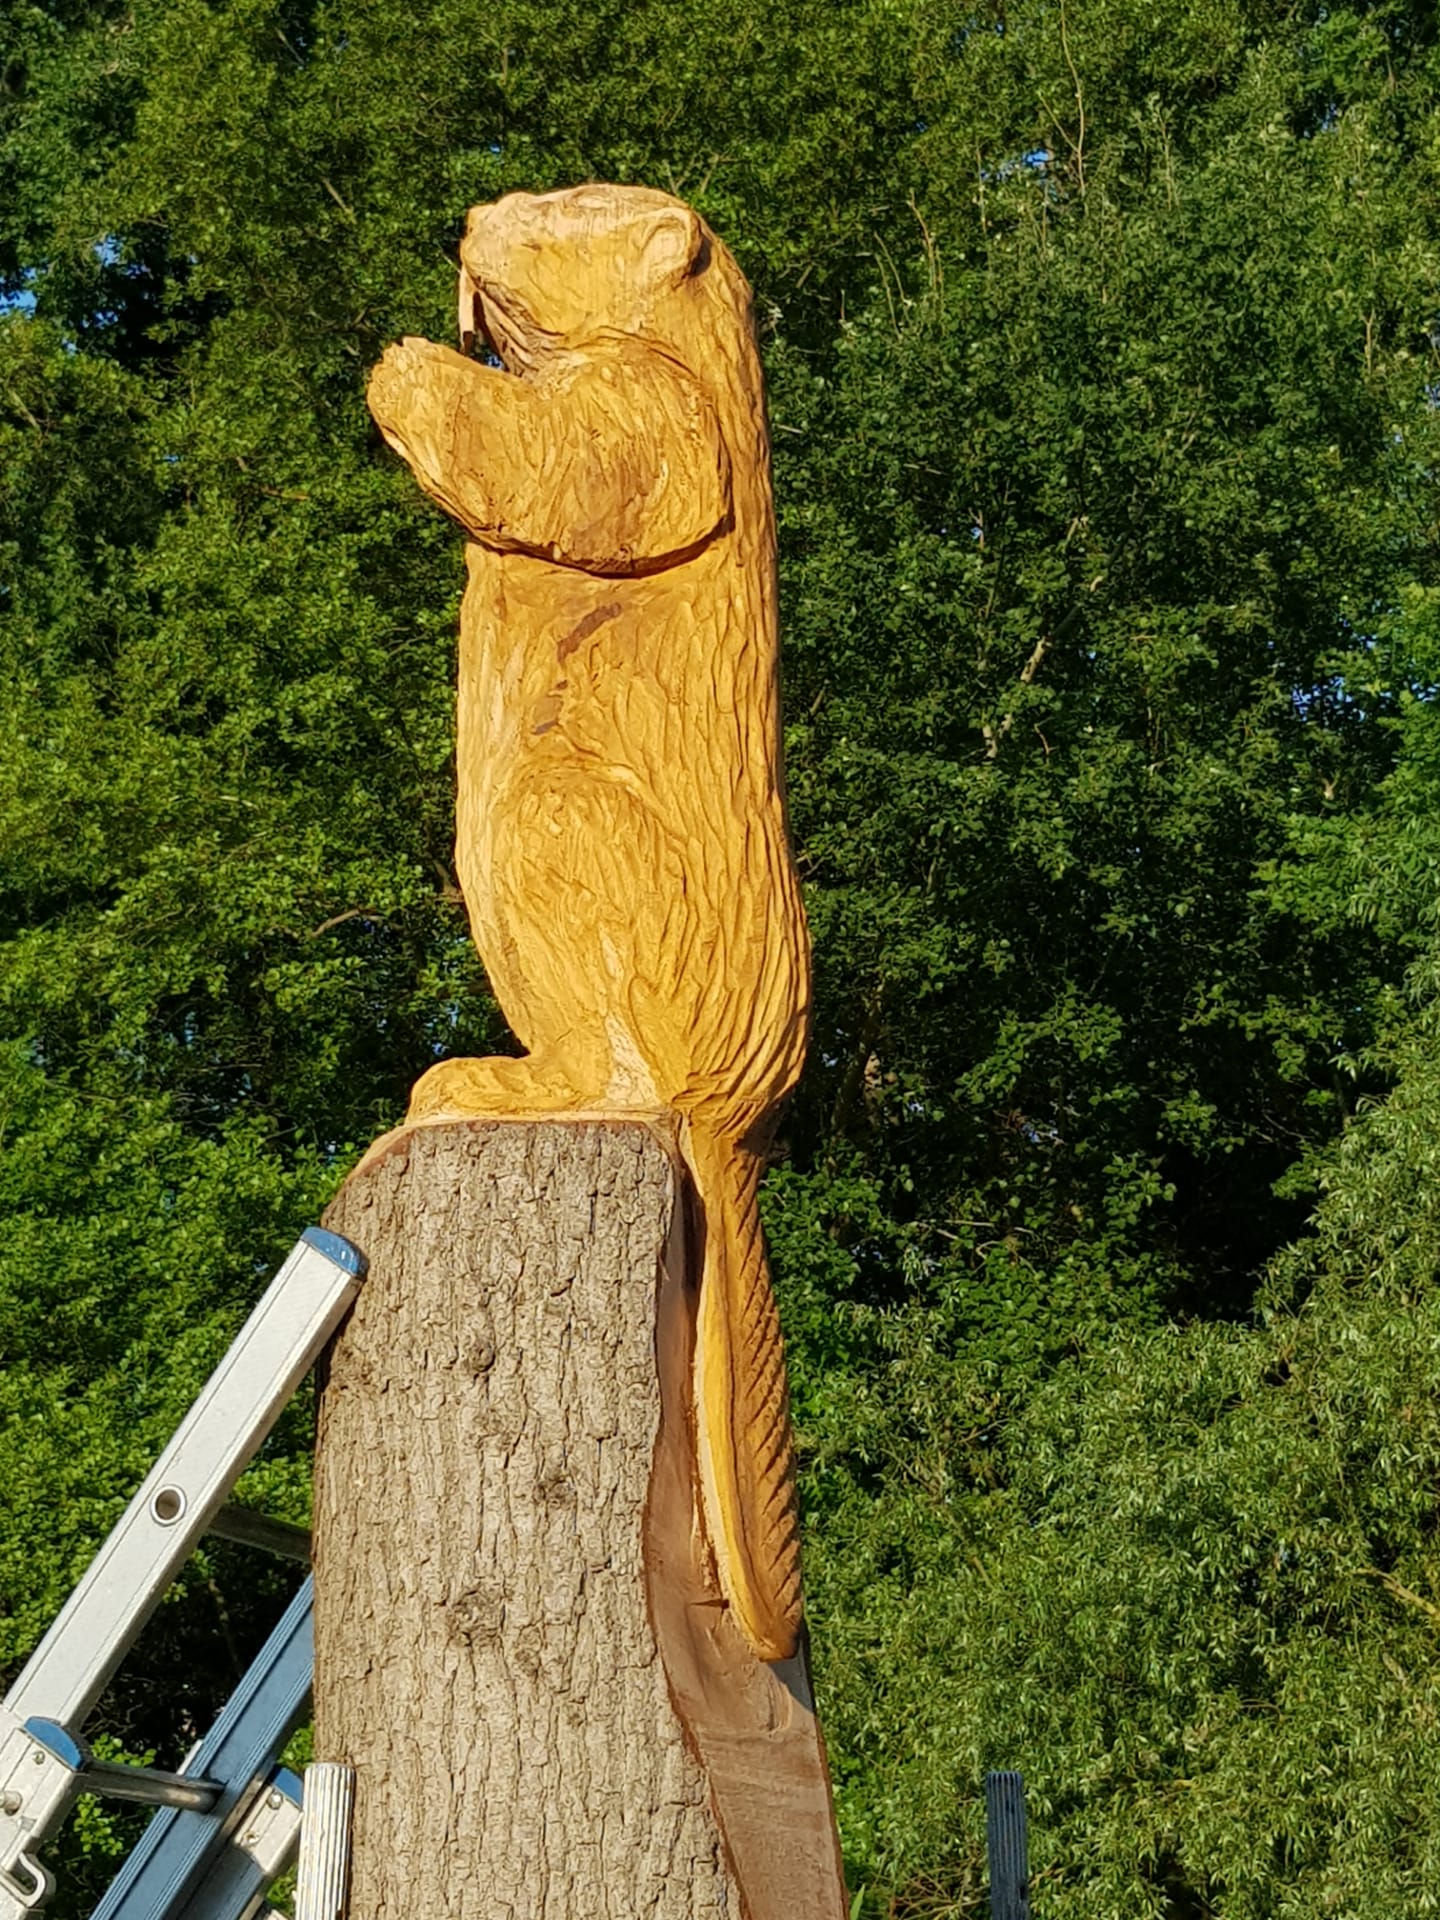 woodcarver maakt bever in boomstam